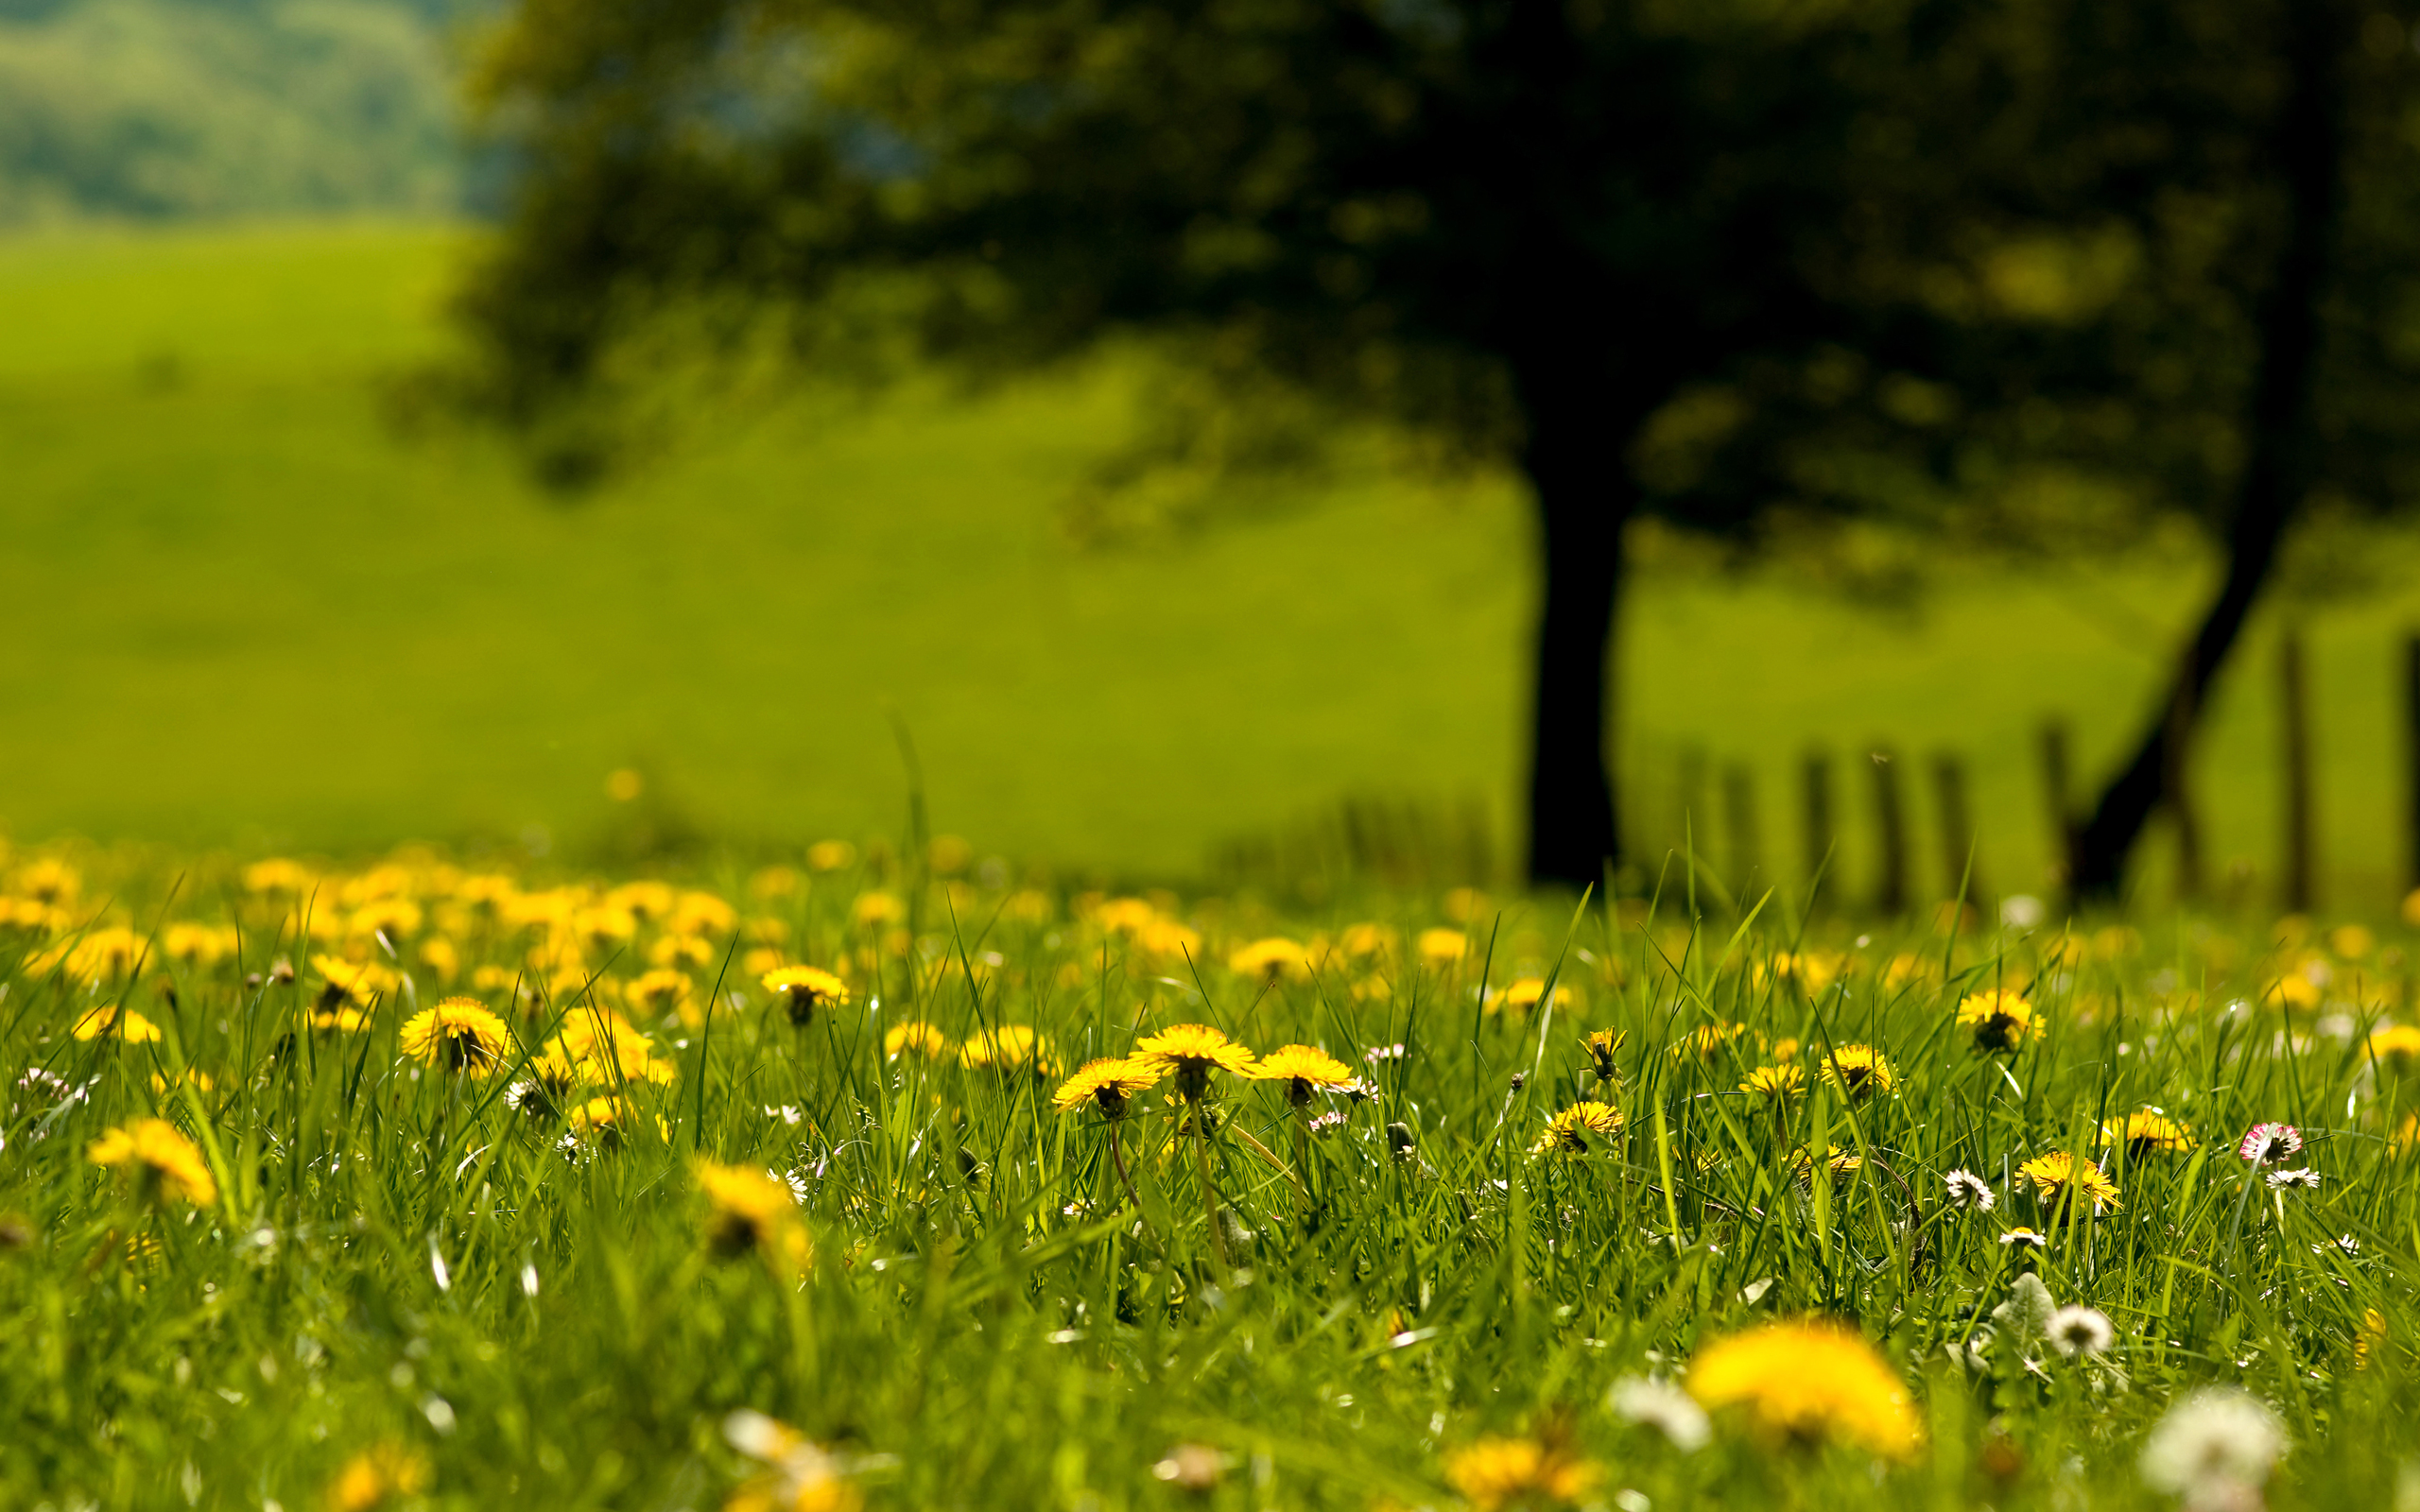 Windows Backgrounds dandelion, earth, field, grass, nature, tree, yellow flower